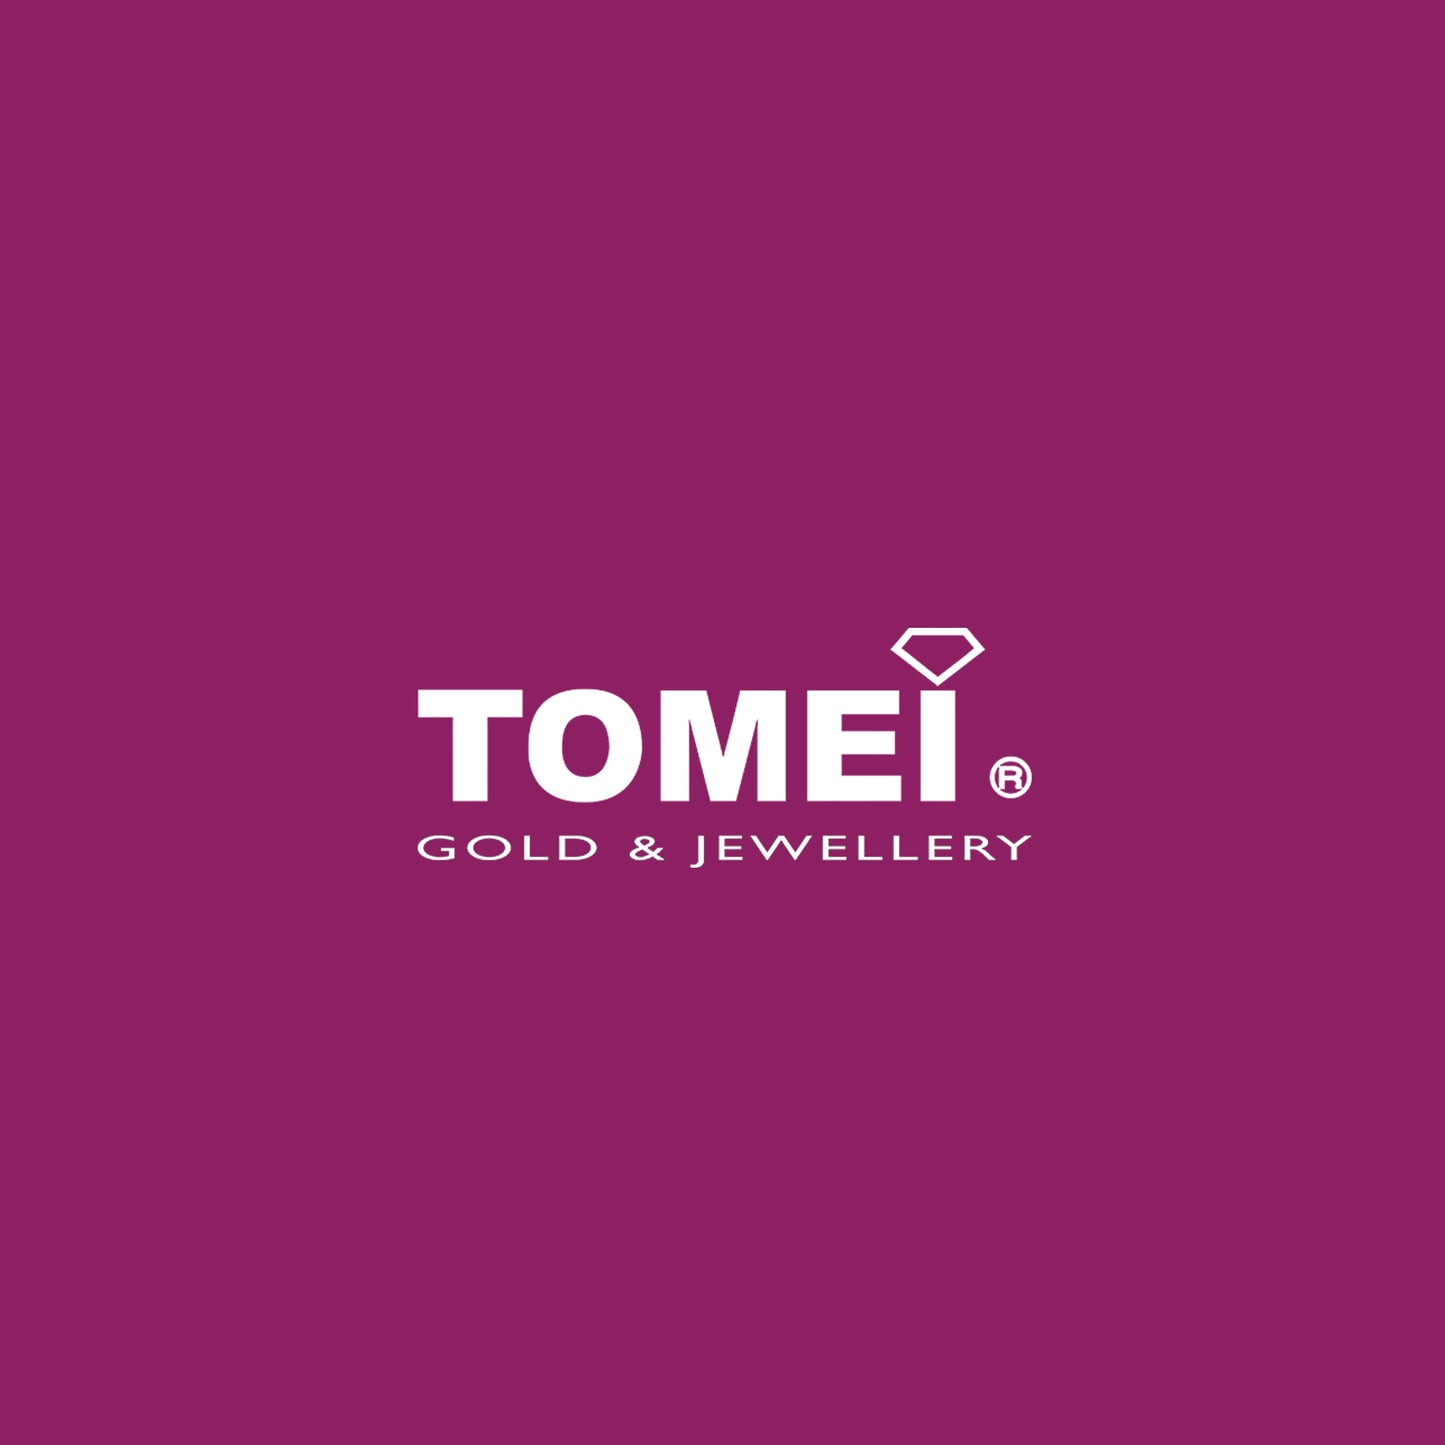 TOMEI Bracelet in Astral Rays of Glitz, Diamond White Gold 375 (B0699/B0699A)